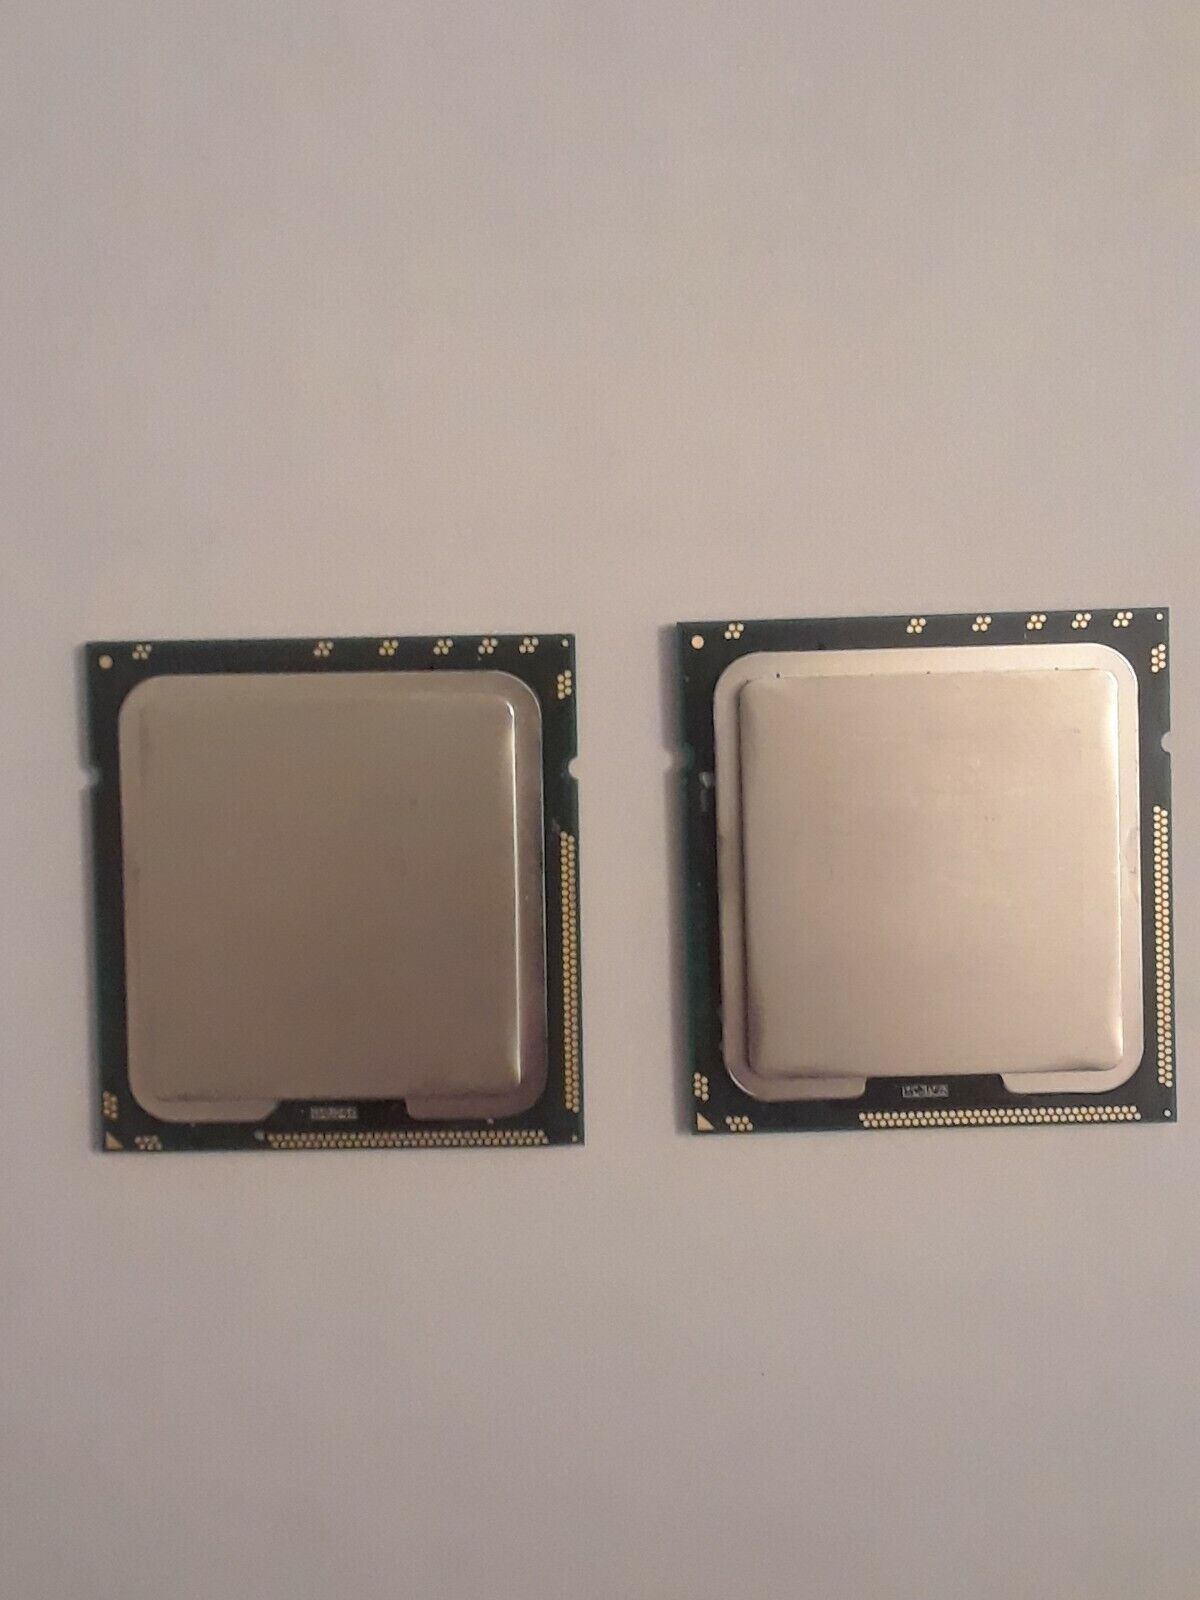 Lot 2 Intel Xeon X5660 2.80GHz Six Core LGA1366 12MB CPU Processor SLBV6